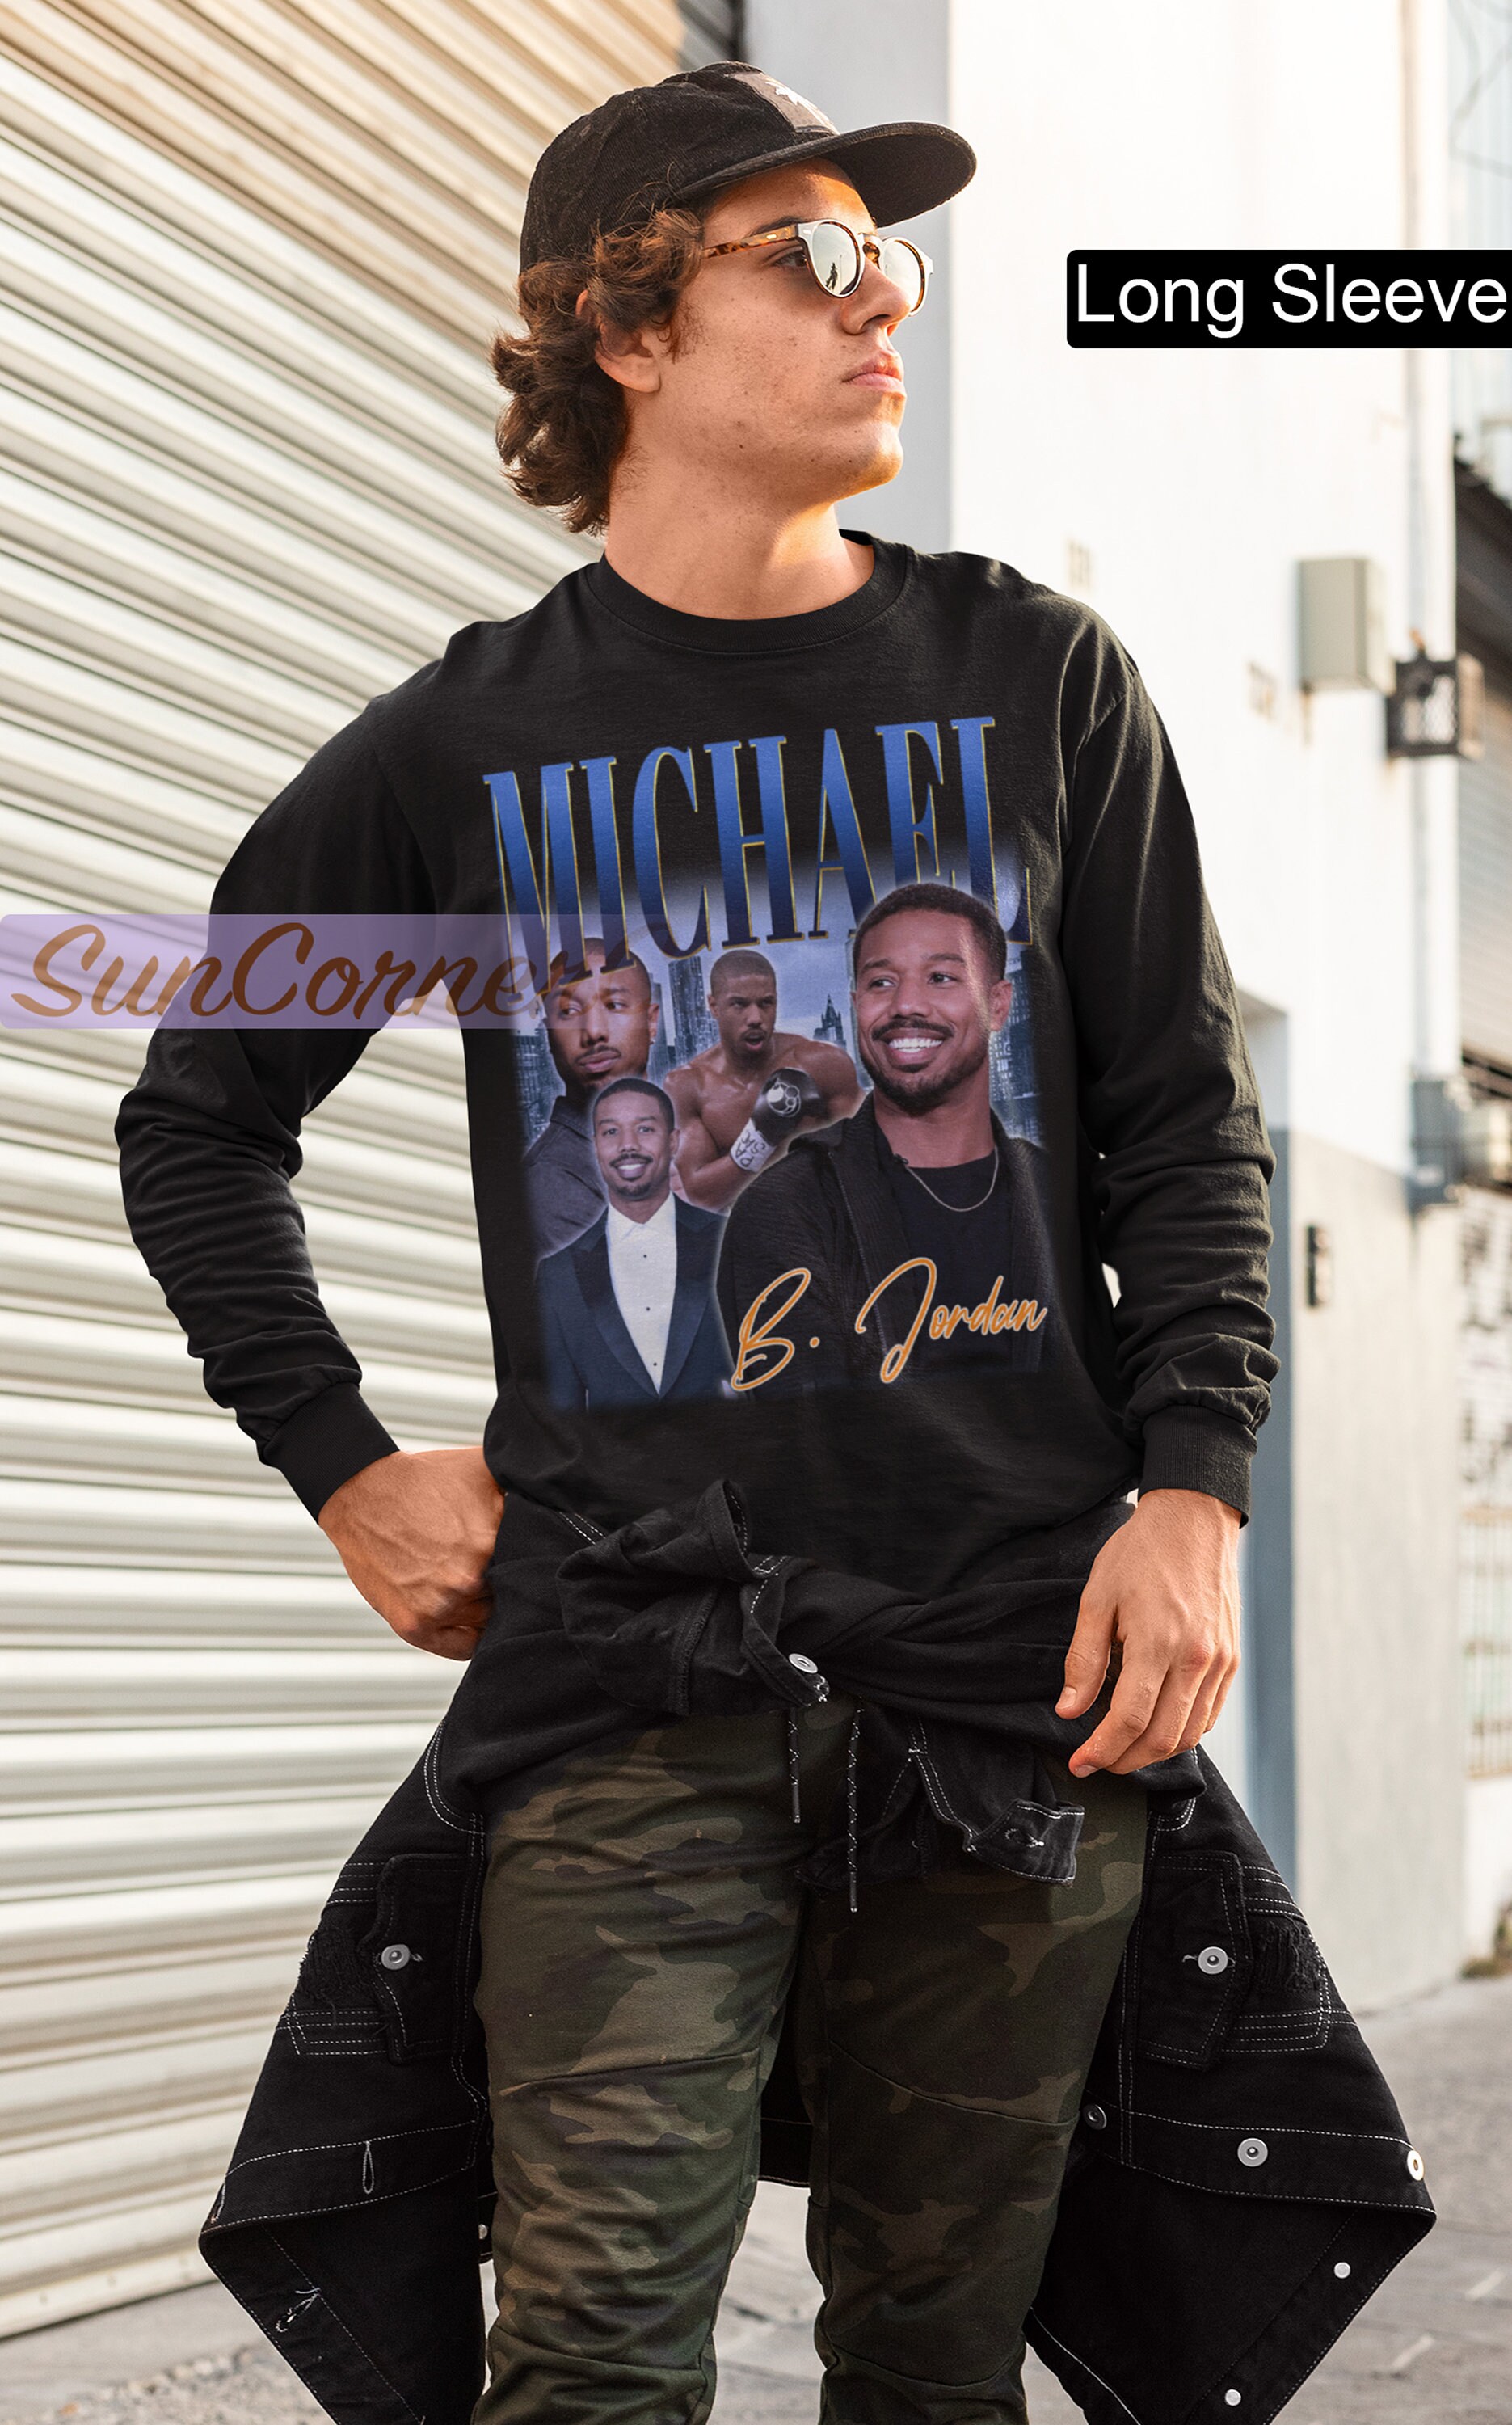 Let Michael B Jordan school you on the power of a statement shirt